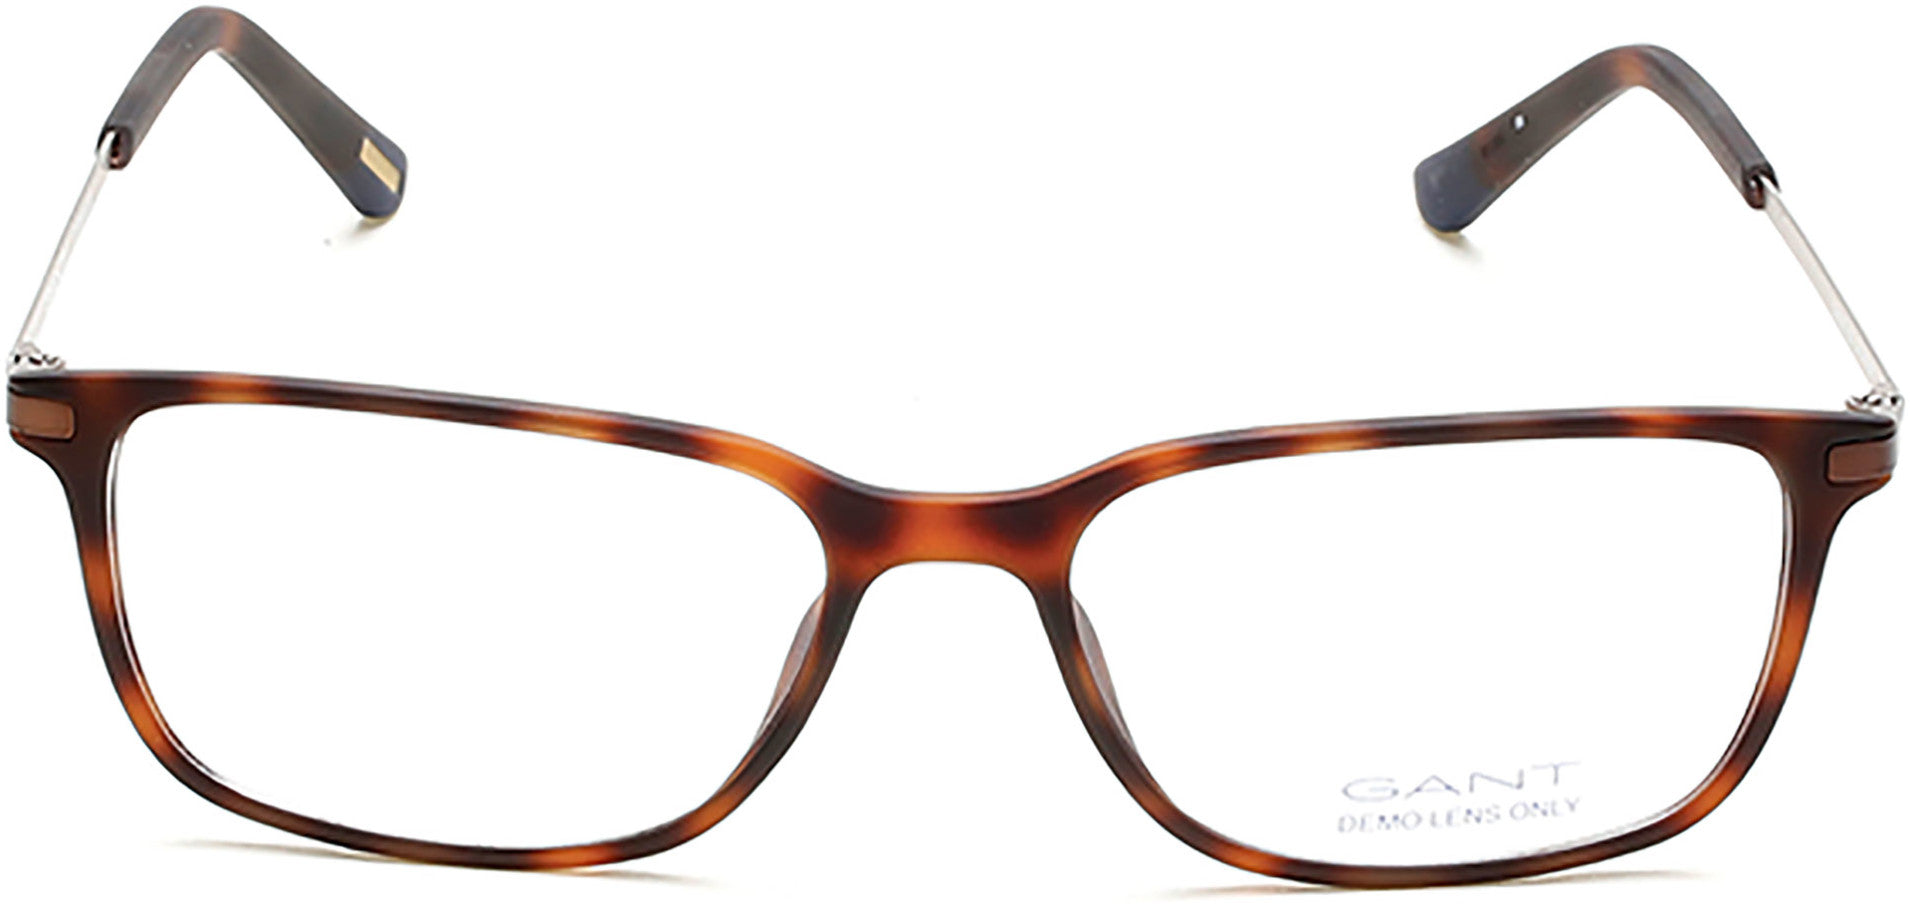 Gant GA3099 Rectangular Eyeglasses 052-052 - Dark Havana